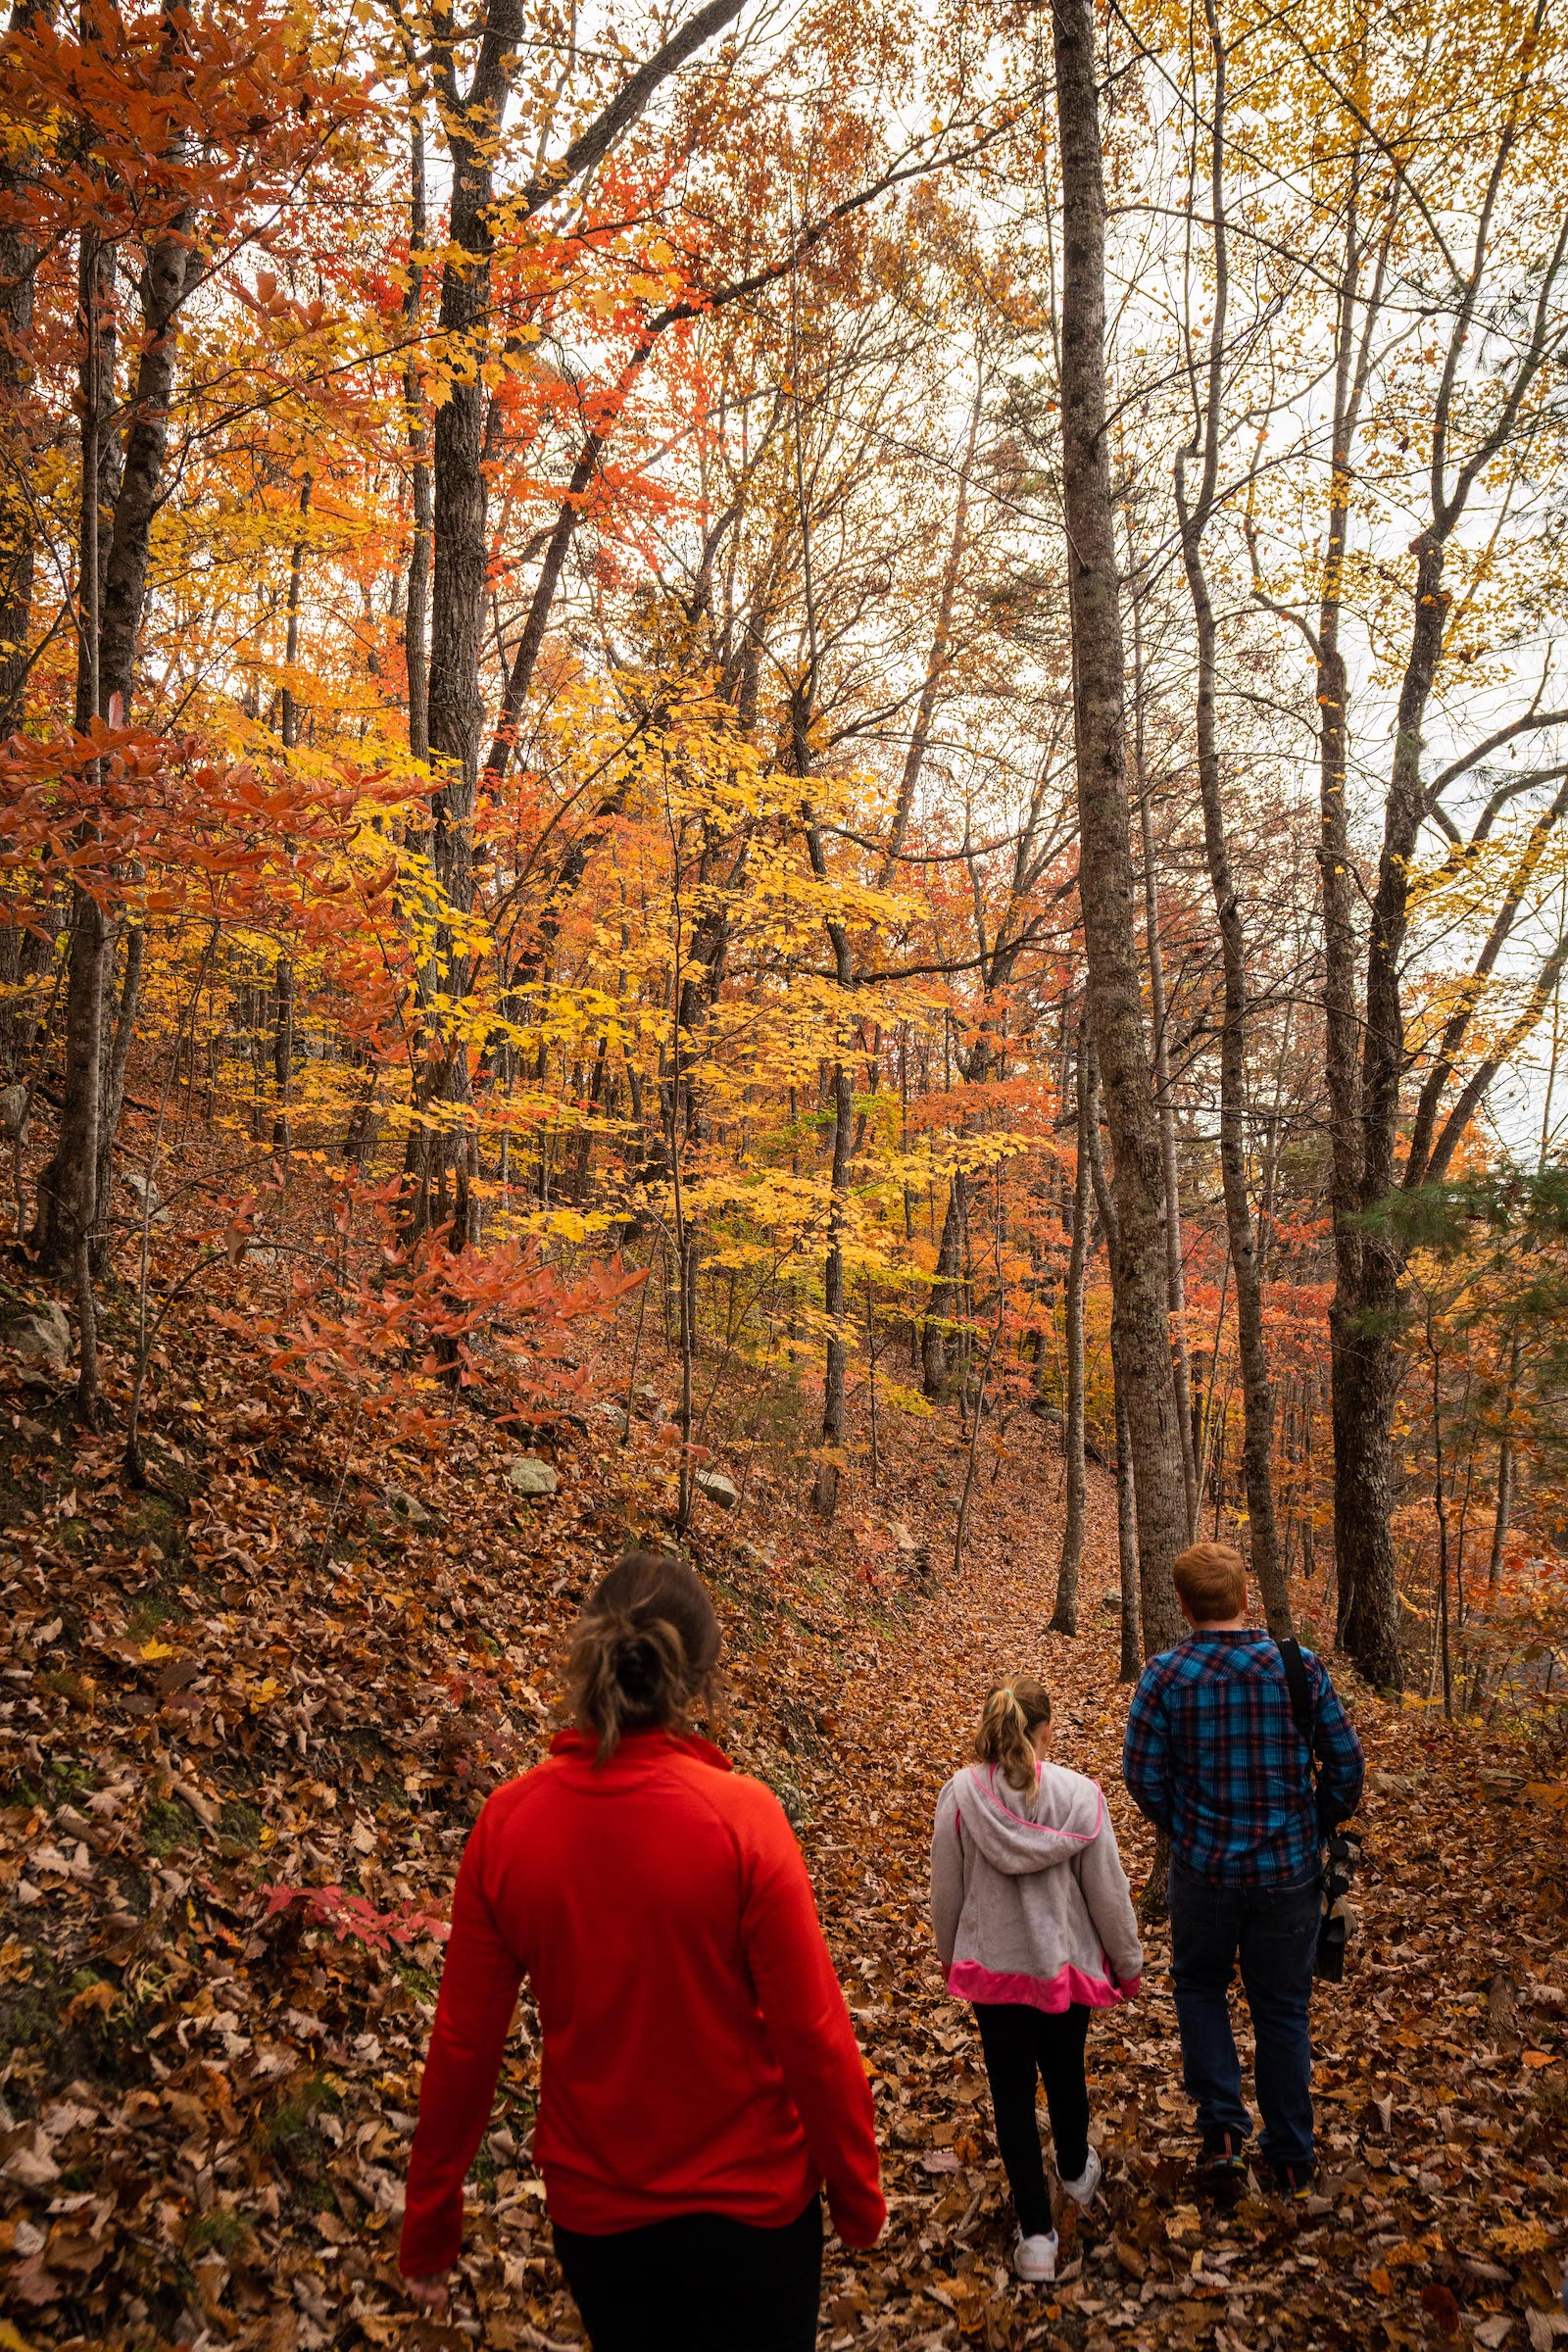 People walk through an autumnal forest in Kentucky.